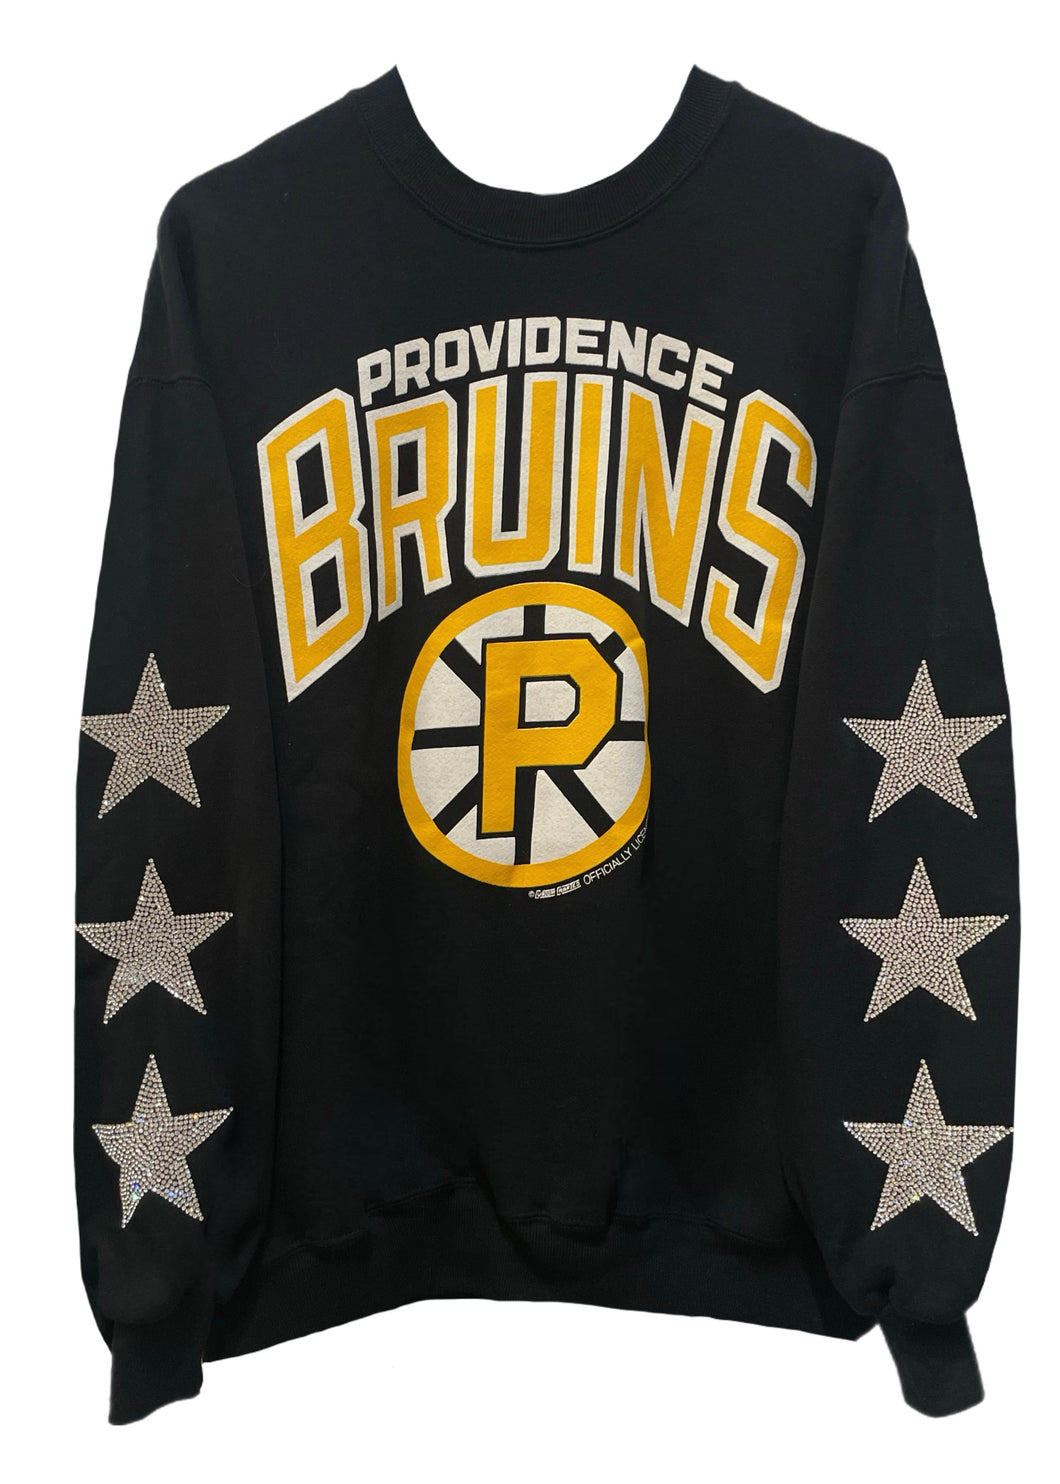 Providence Bruins, Hockey One of a KIND Vintage Sweatshirt with Three Crystal Star Design